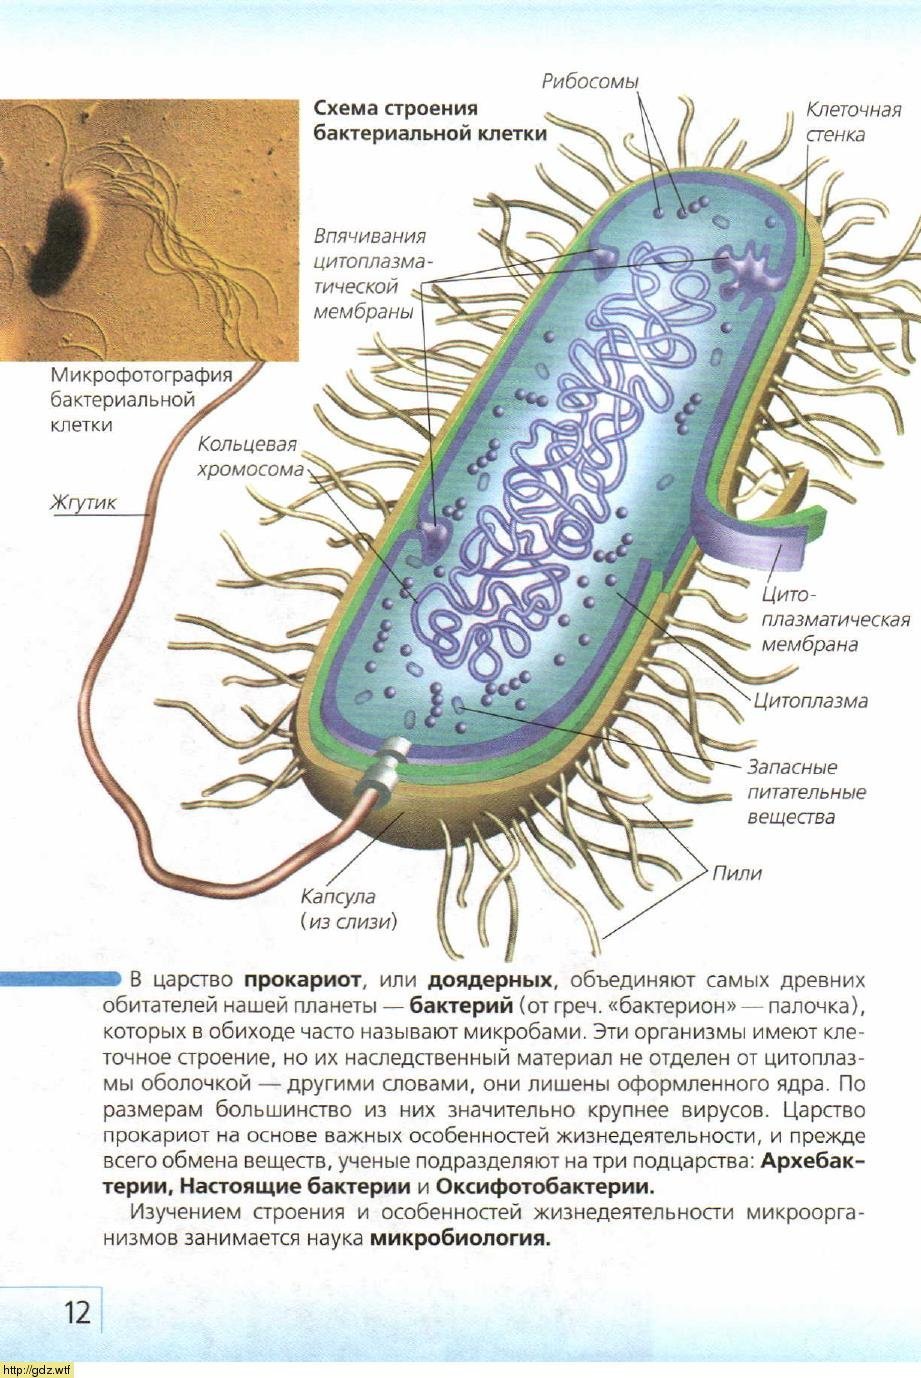 Бактерия прокариот строение. Строение бактериальной клетки прокариот. Строение бактериальной клетки. Особенности строения бактериальной клетки. Строение прокариот.